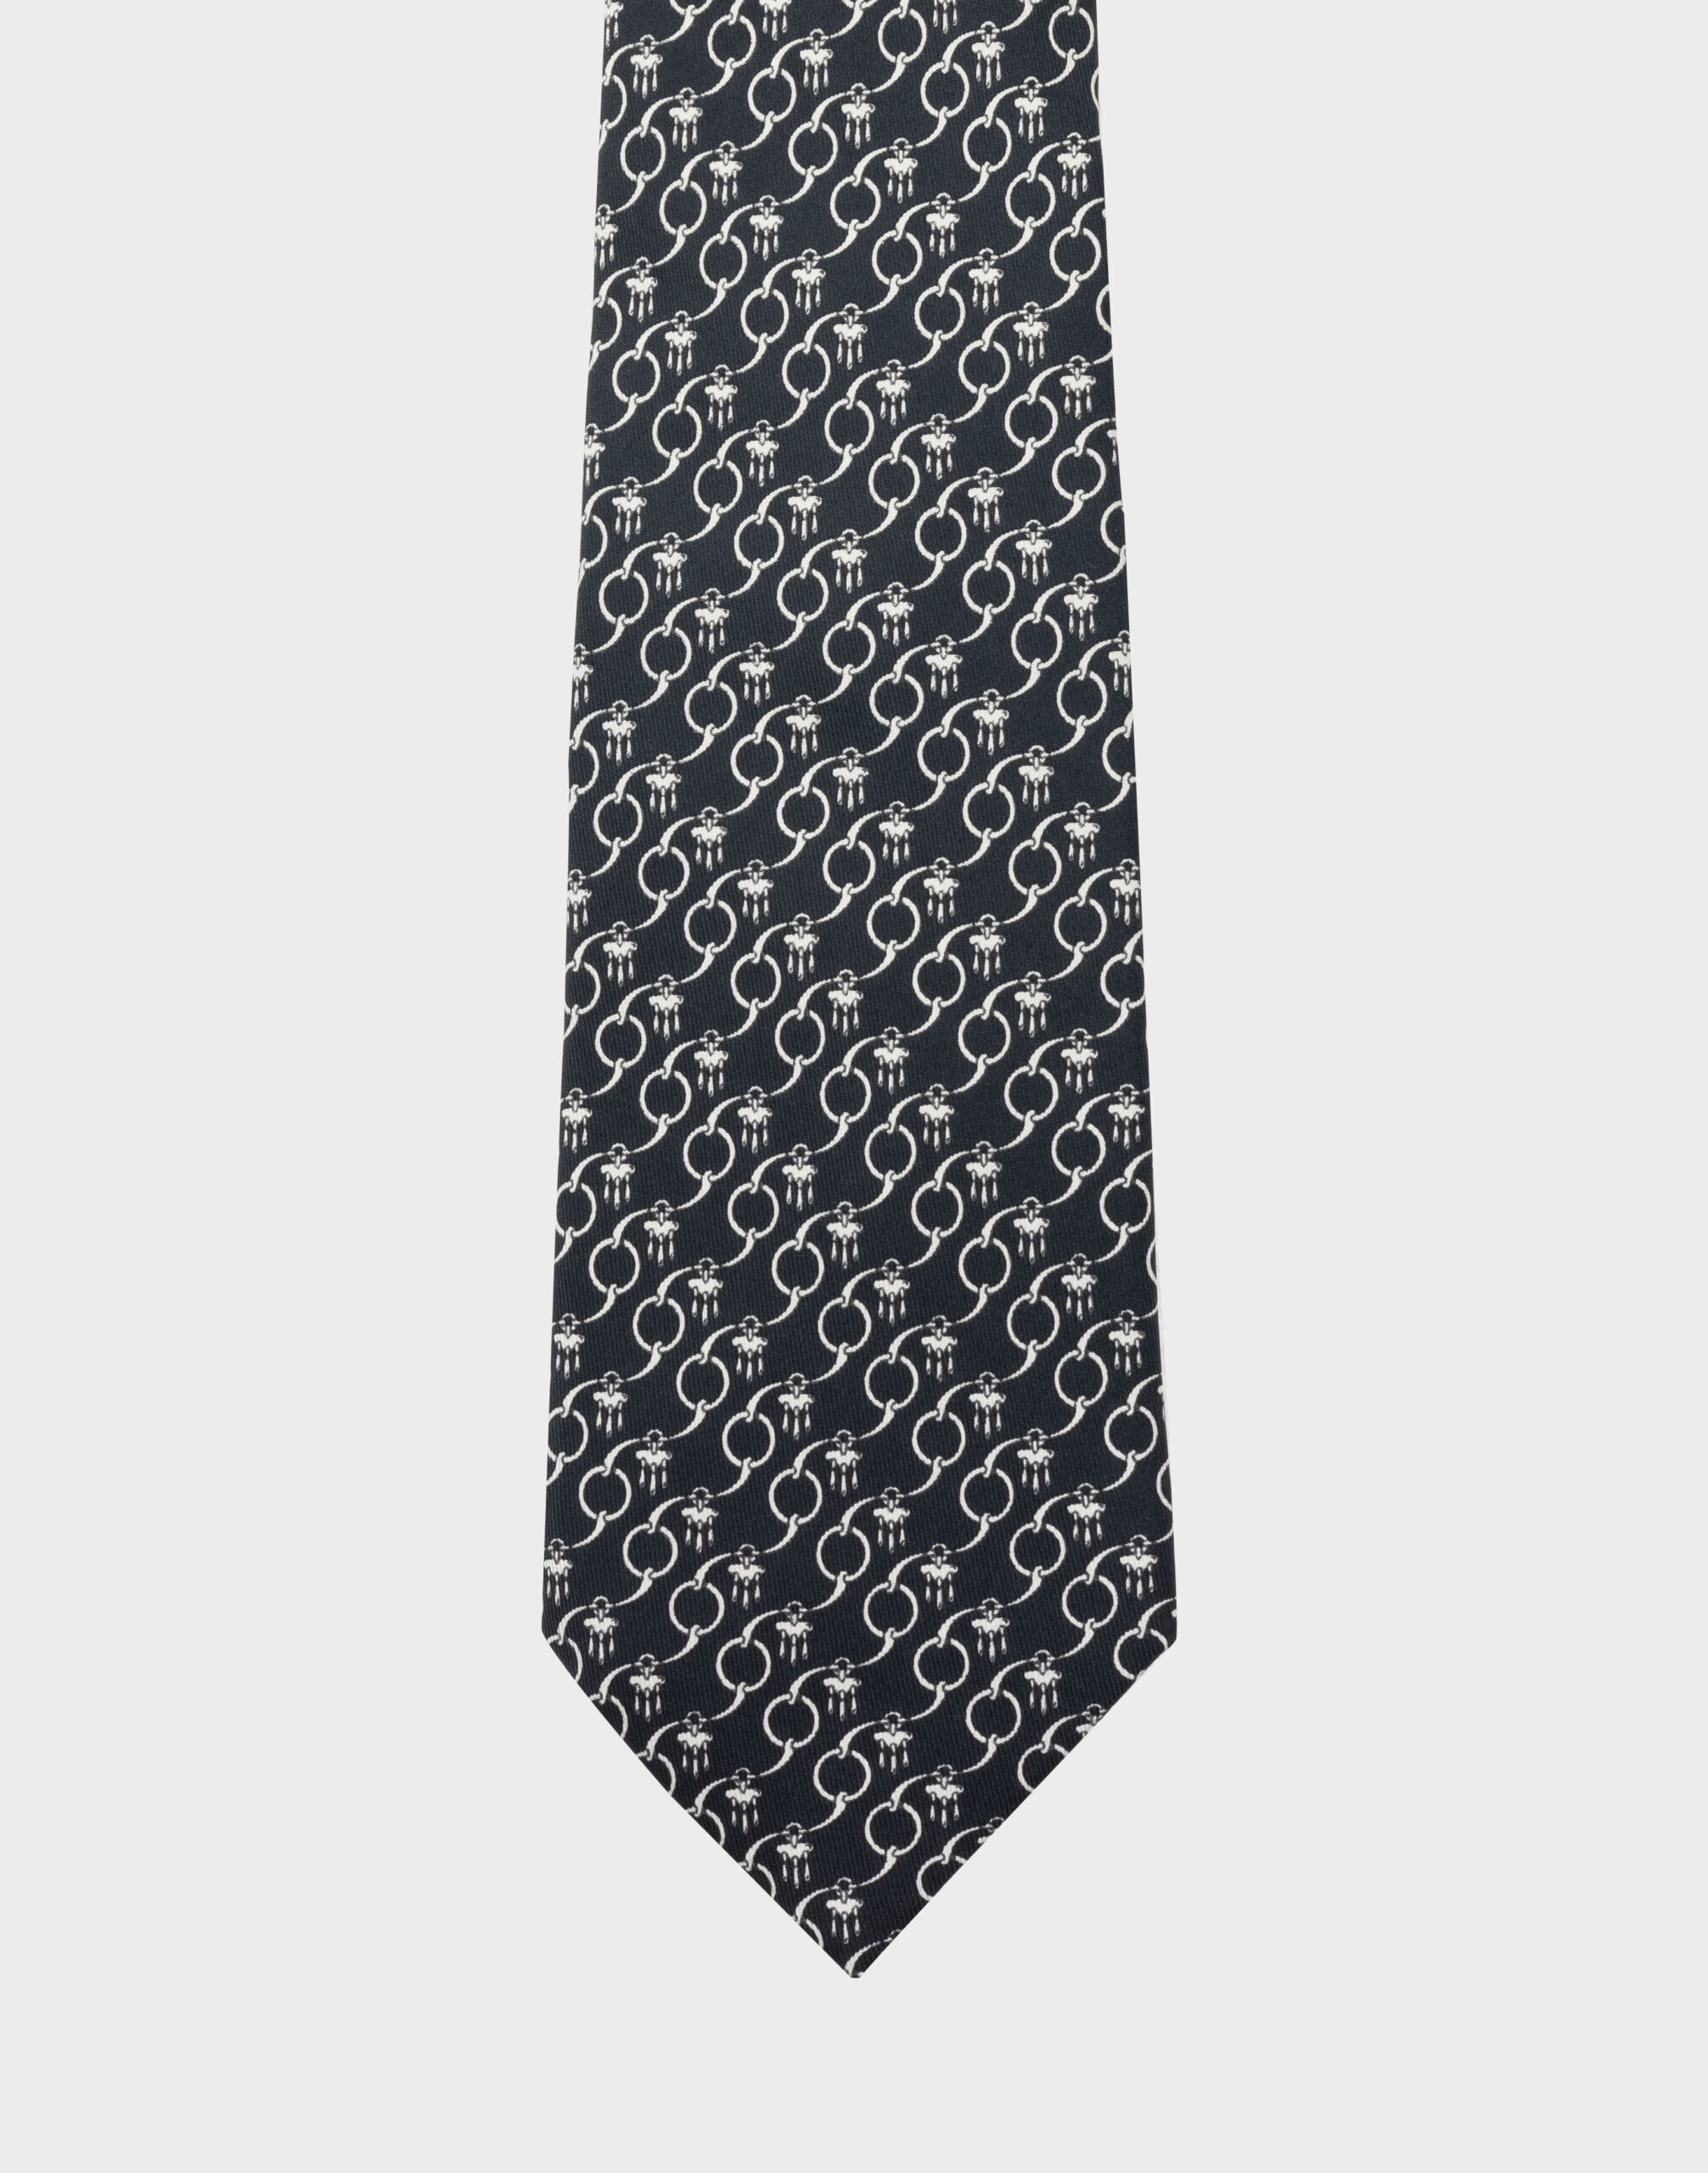 cravatta nera in seta hermes con motivo a catene bianche